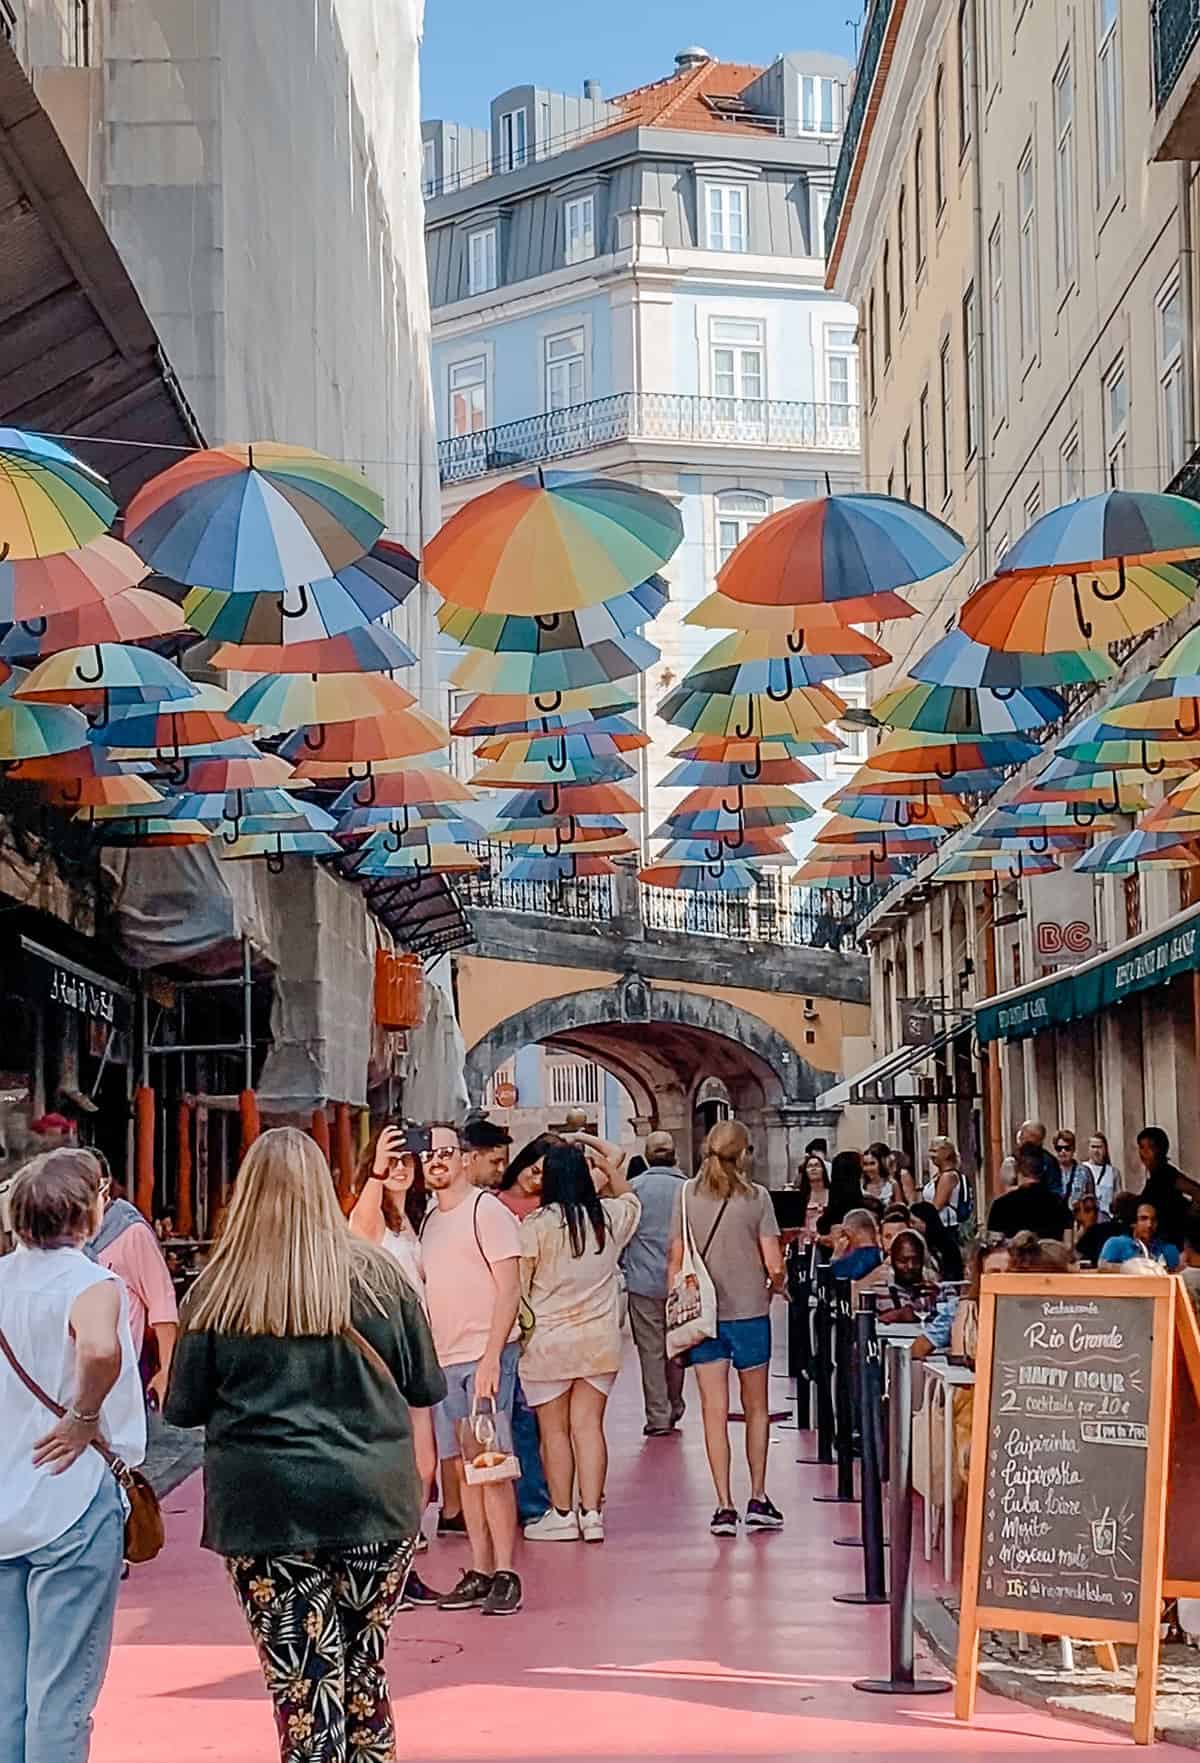 Colorful umbrellas on pink street.